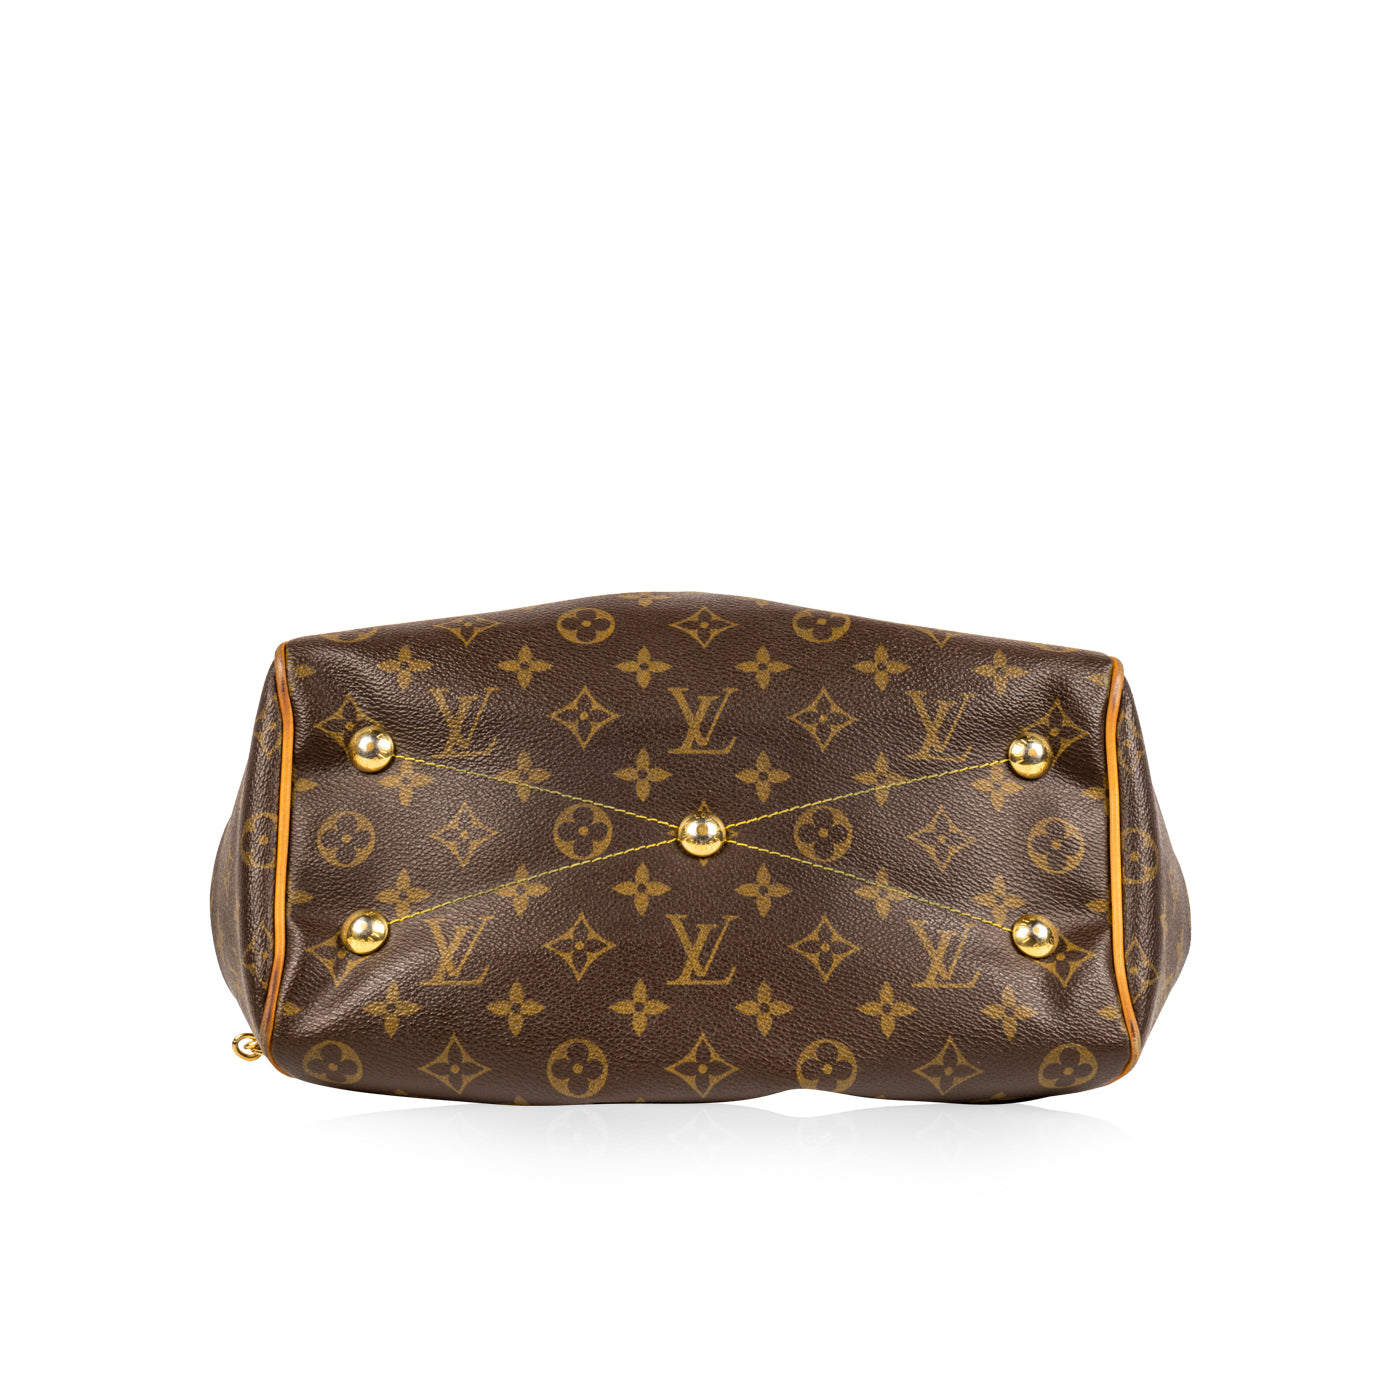 Louis Vuitton Tivoli PM Handbag - Farfetch